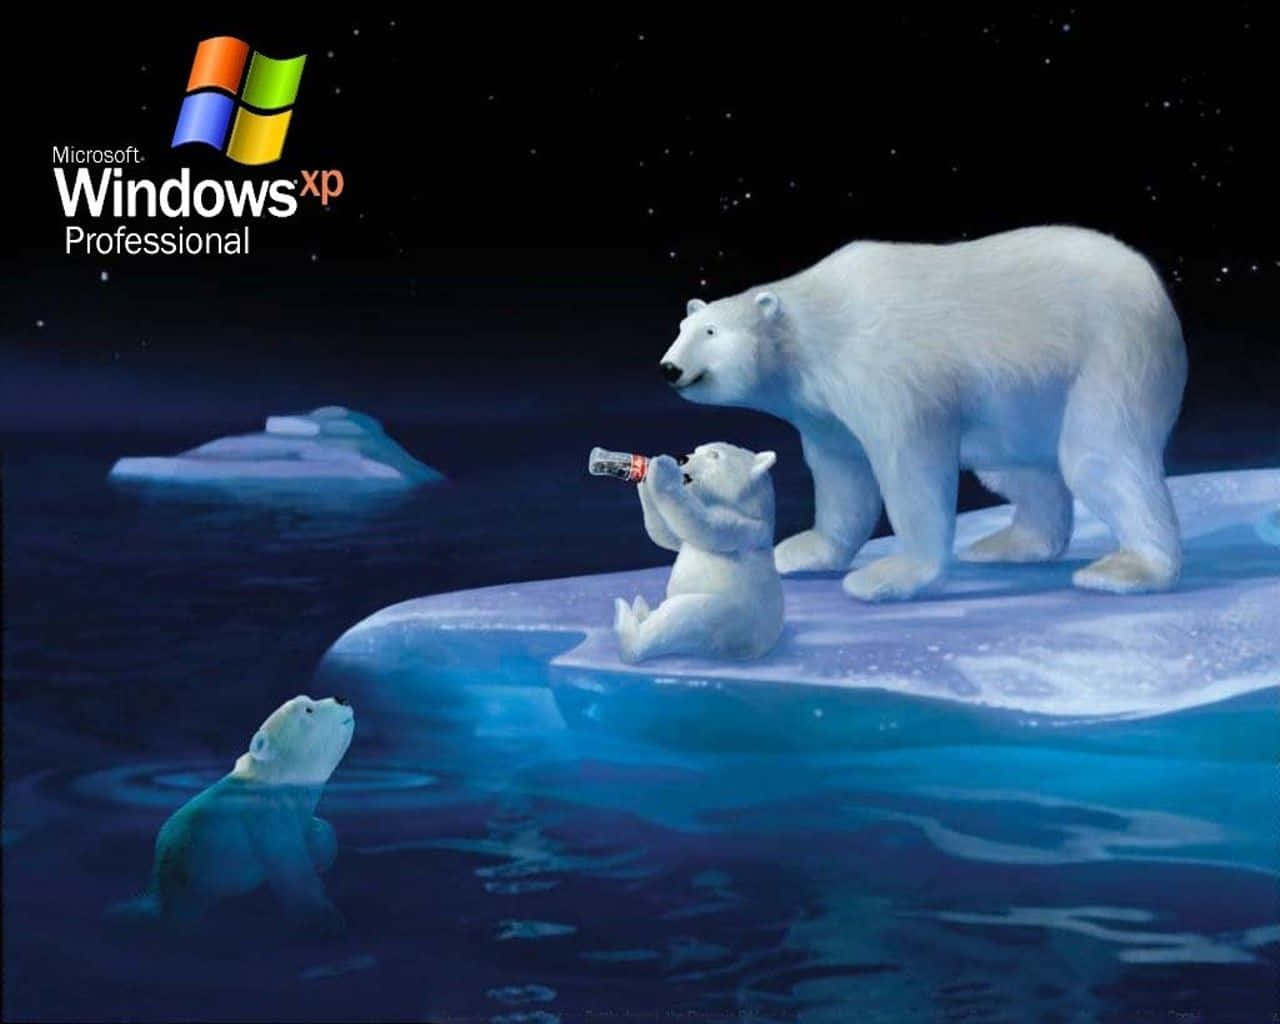 Enjoy the beauty of Windows XP